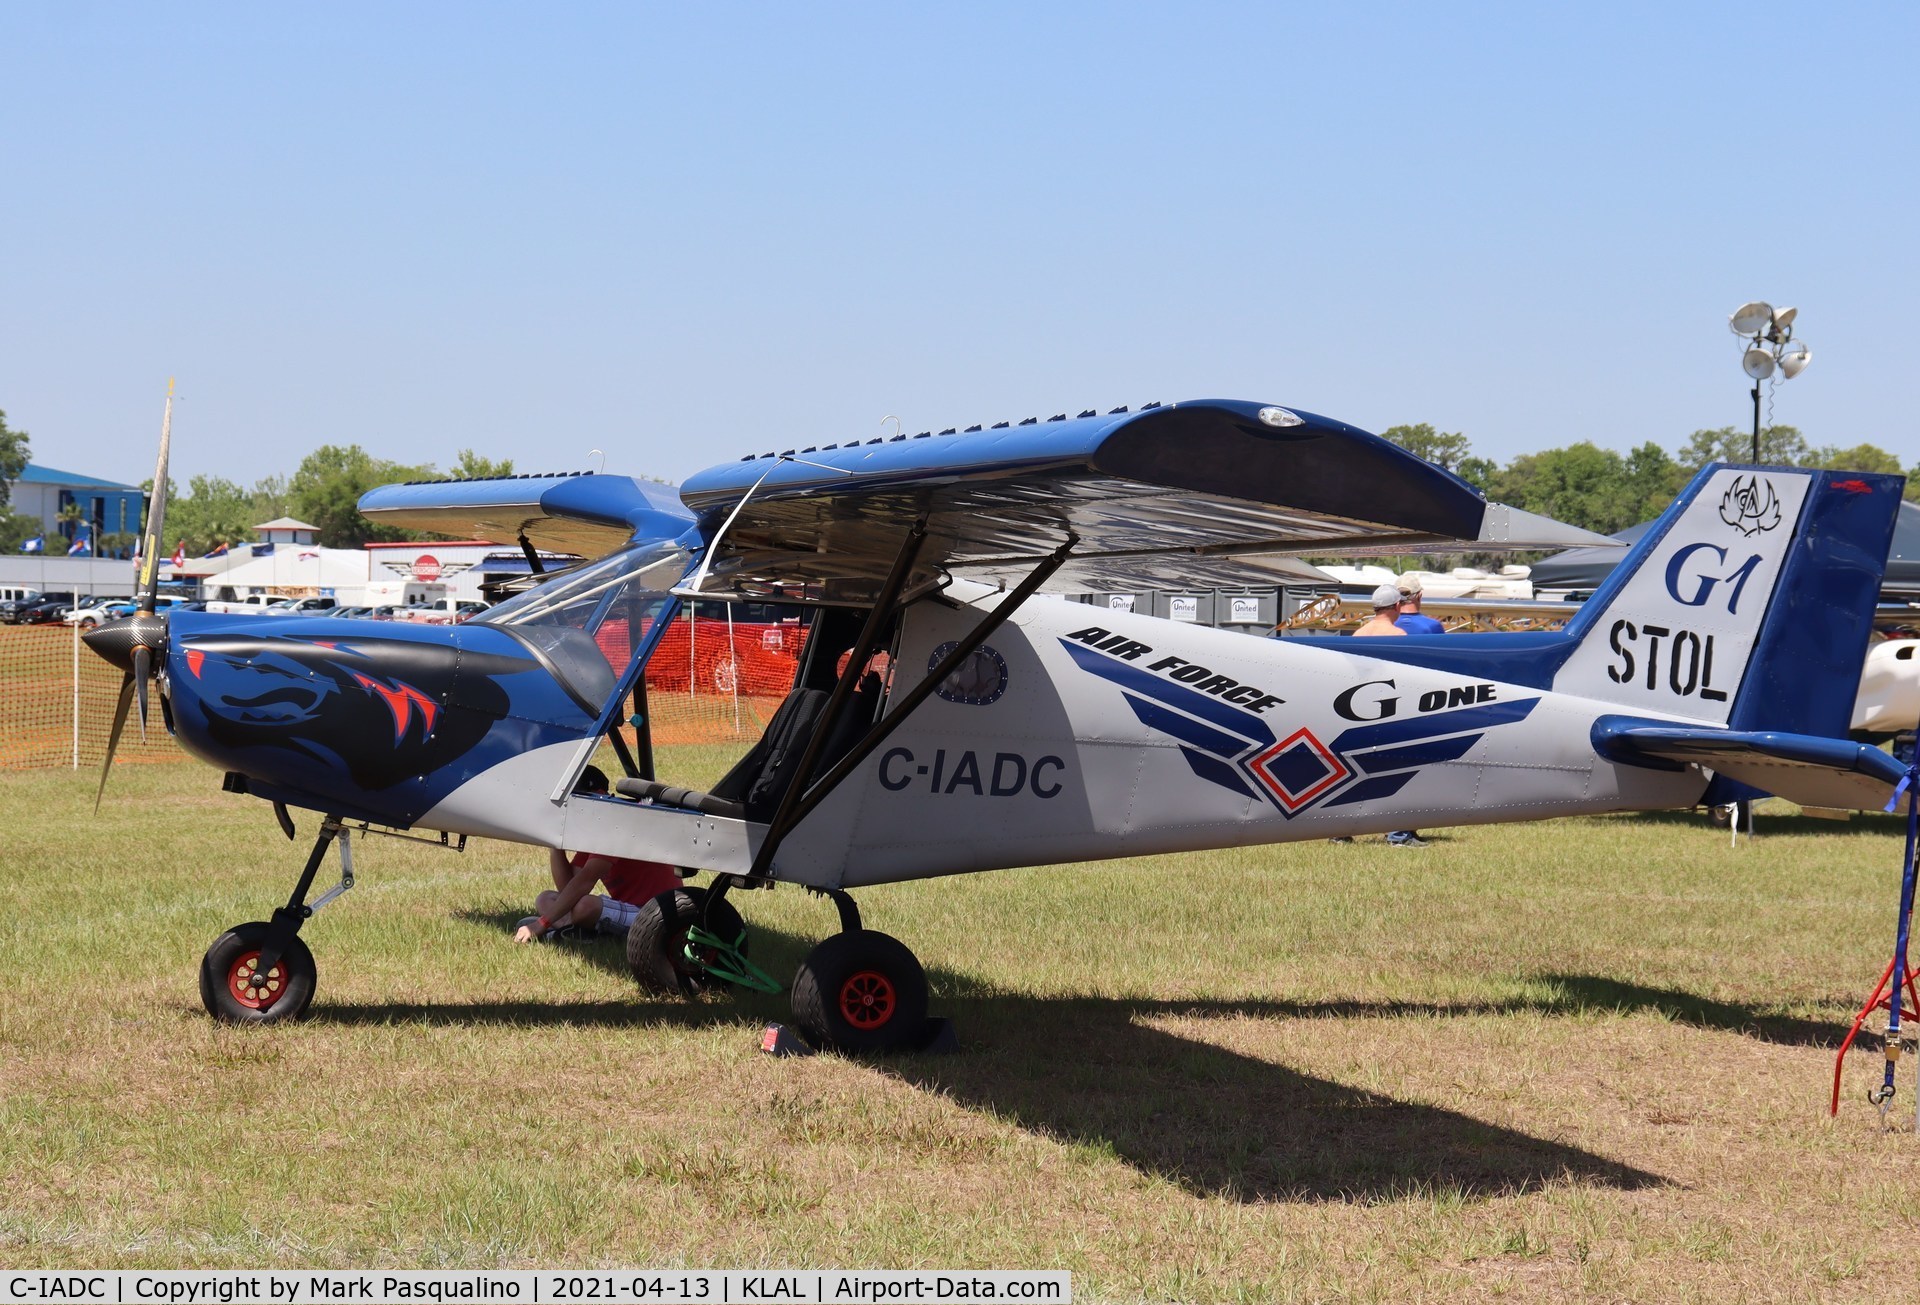 C-IADC, 2005 G1 Aviation G1 STOL C/N 0019, G1 STOL